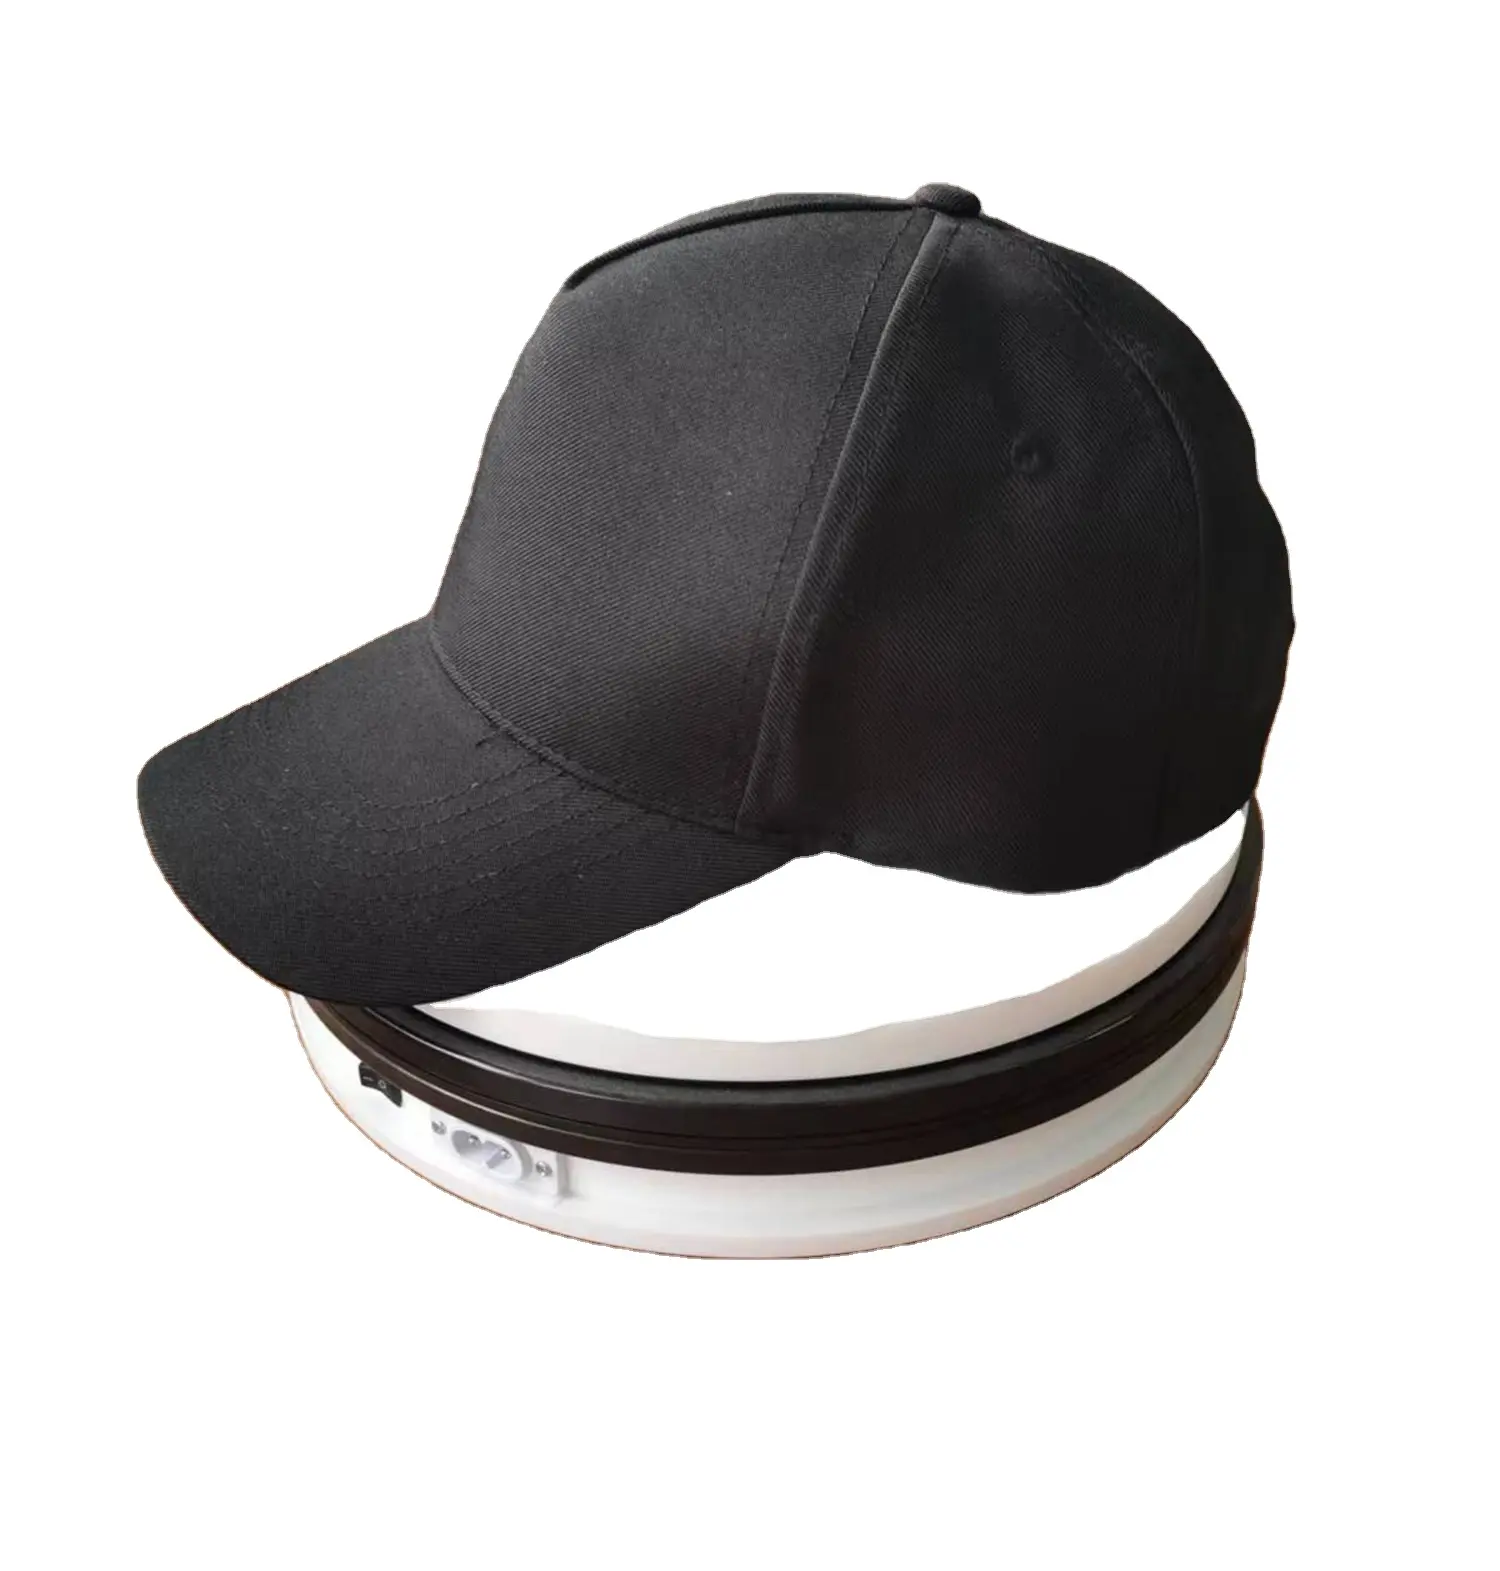 Chapéu esportivo unissex de poliéster 5 painéis, chapéu branco 100%